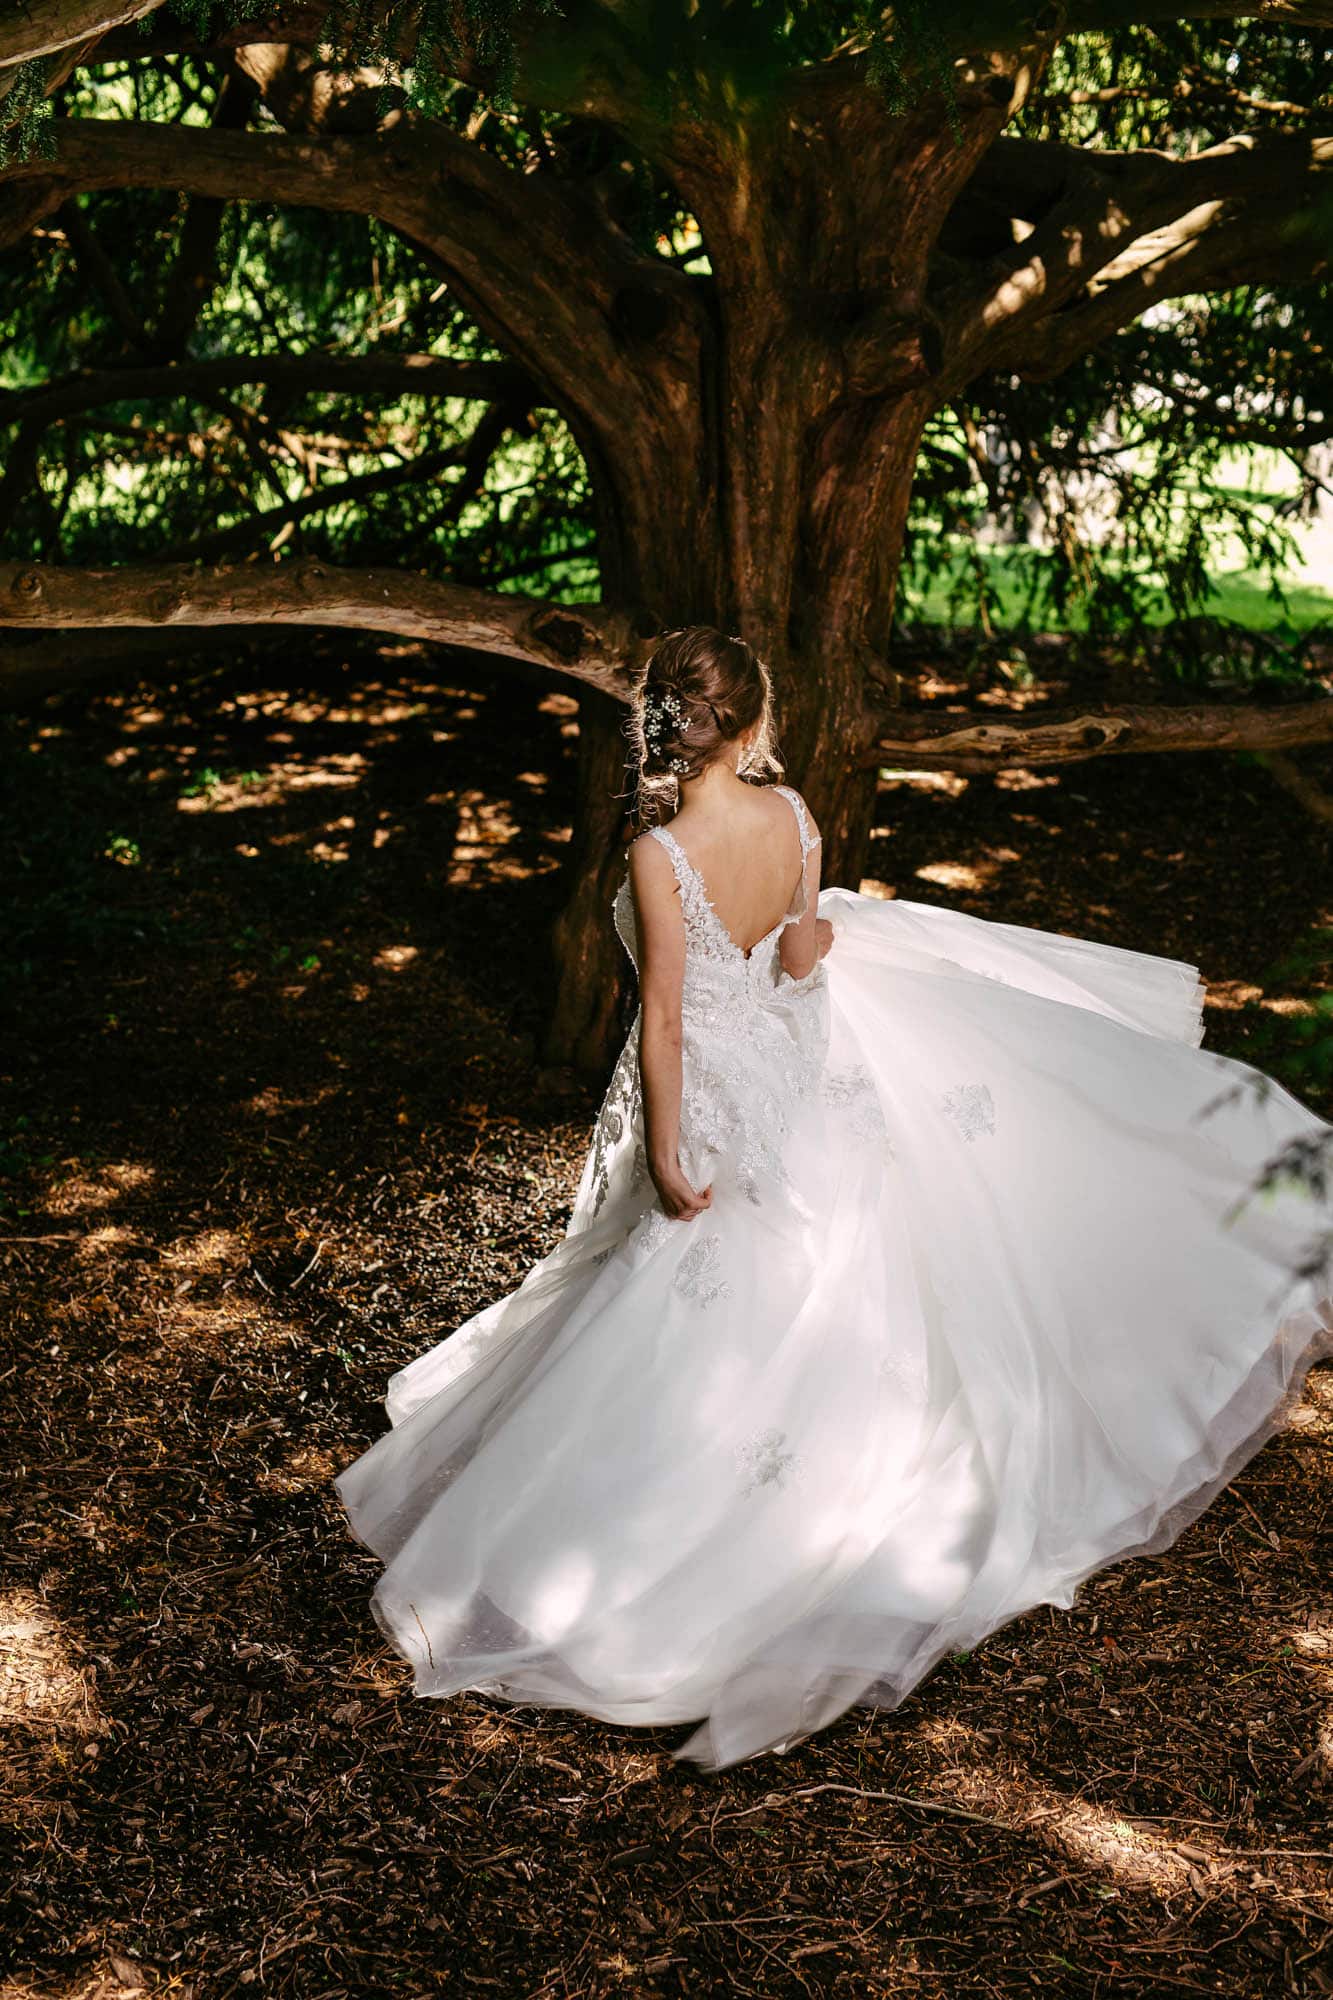 A bride in an A-line wedding dress stands under a tree.